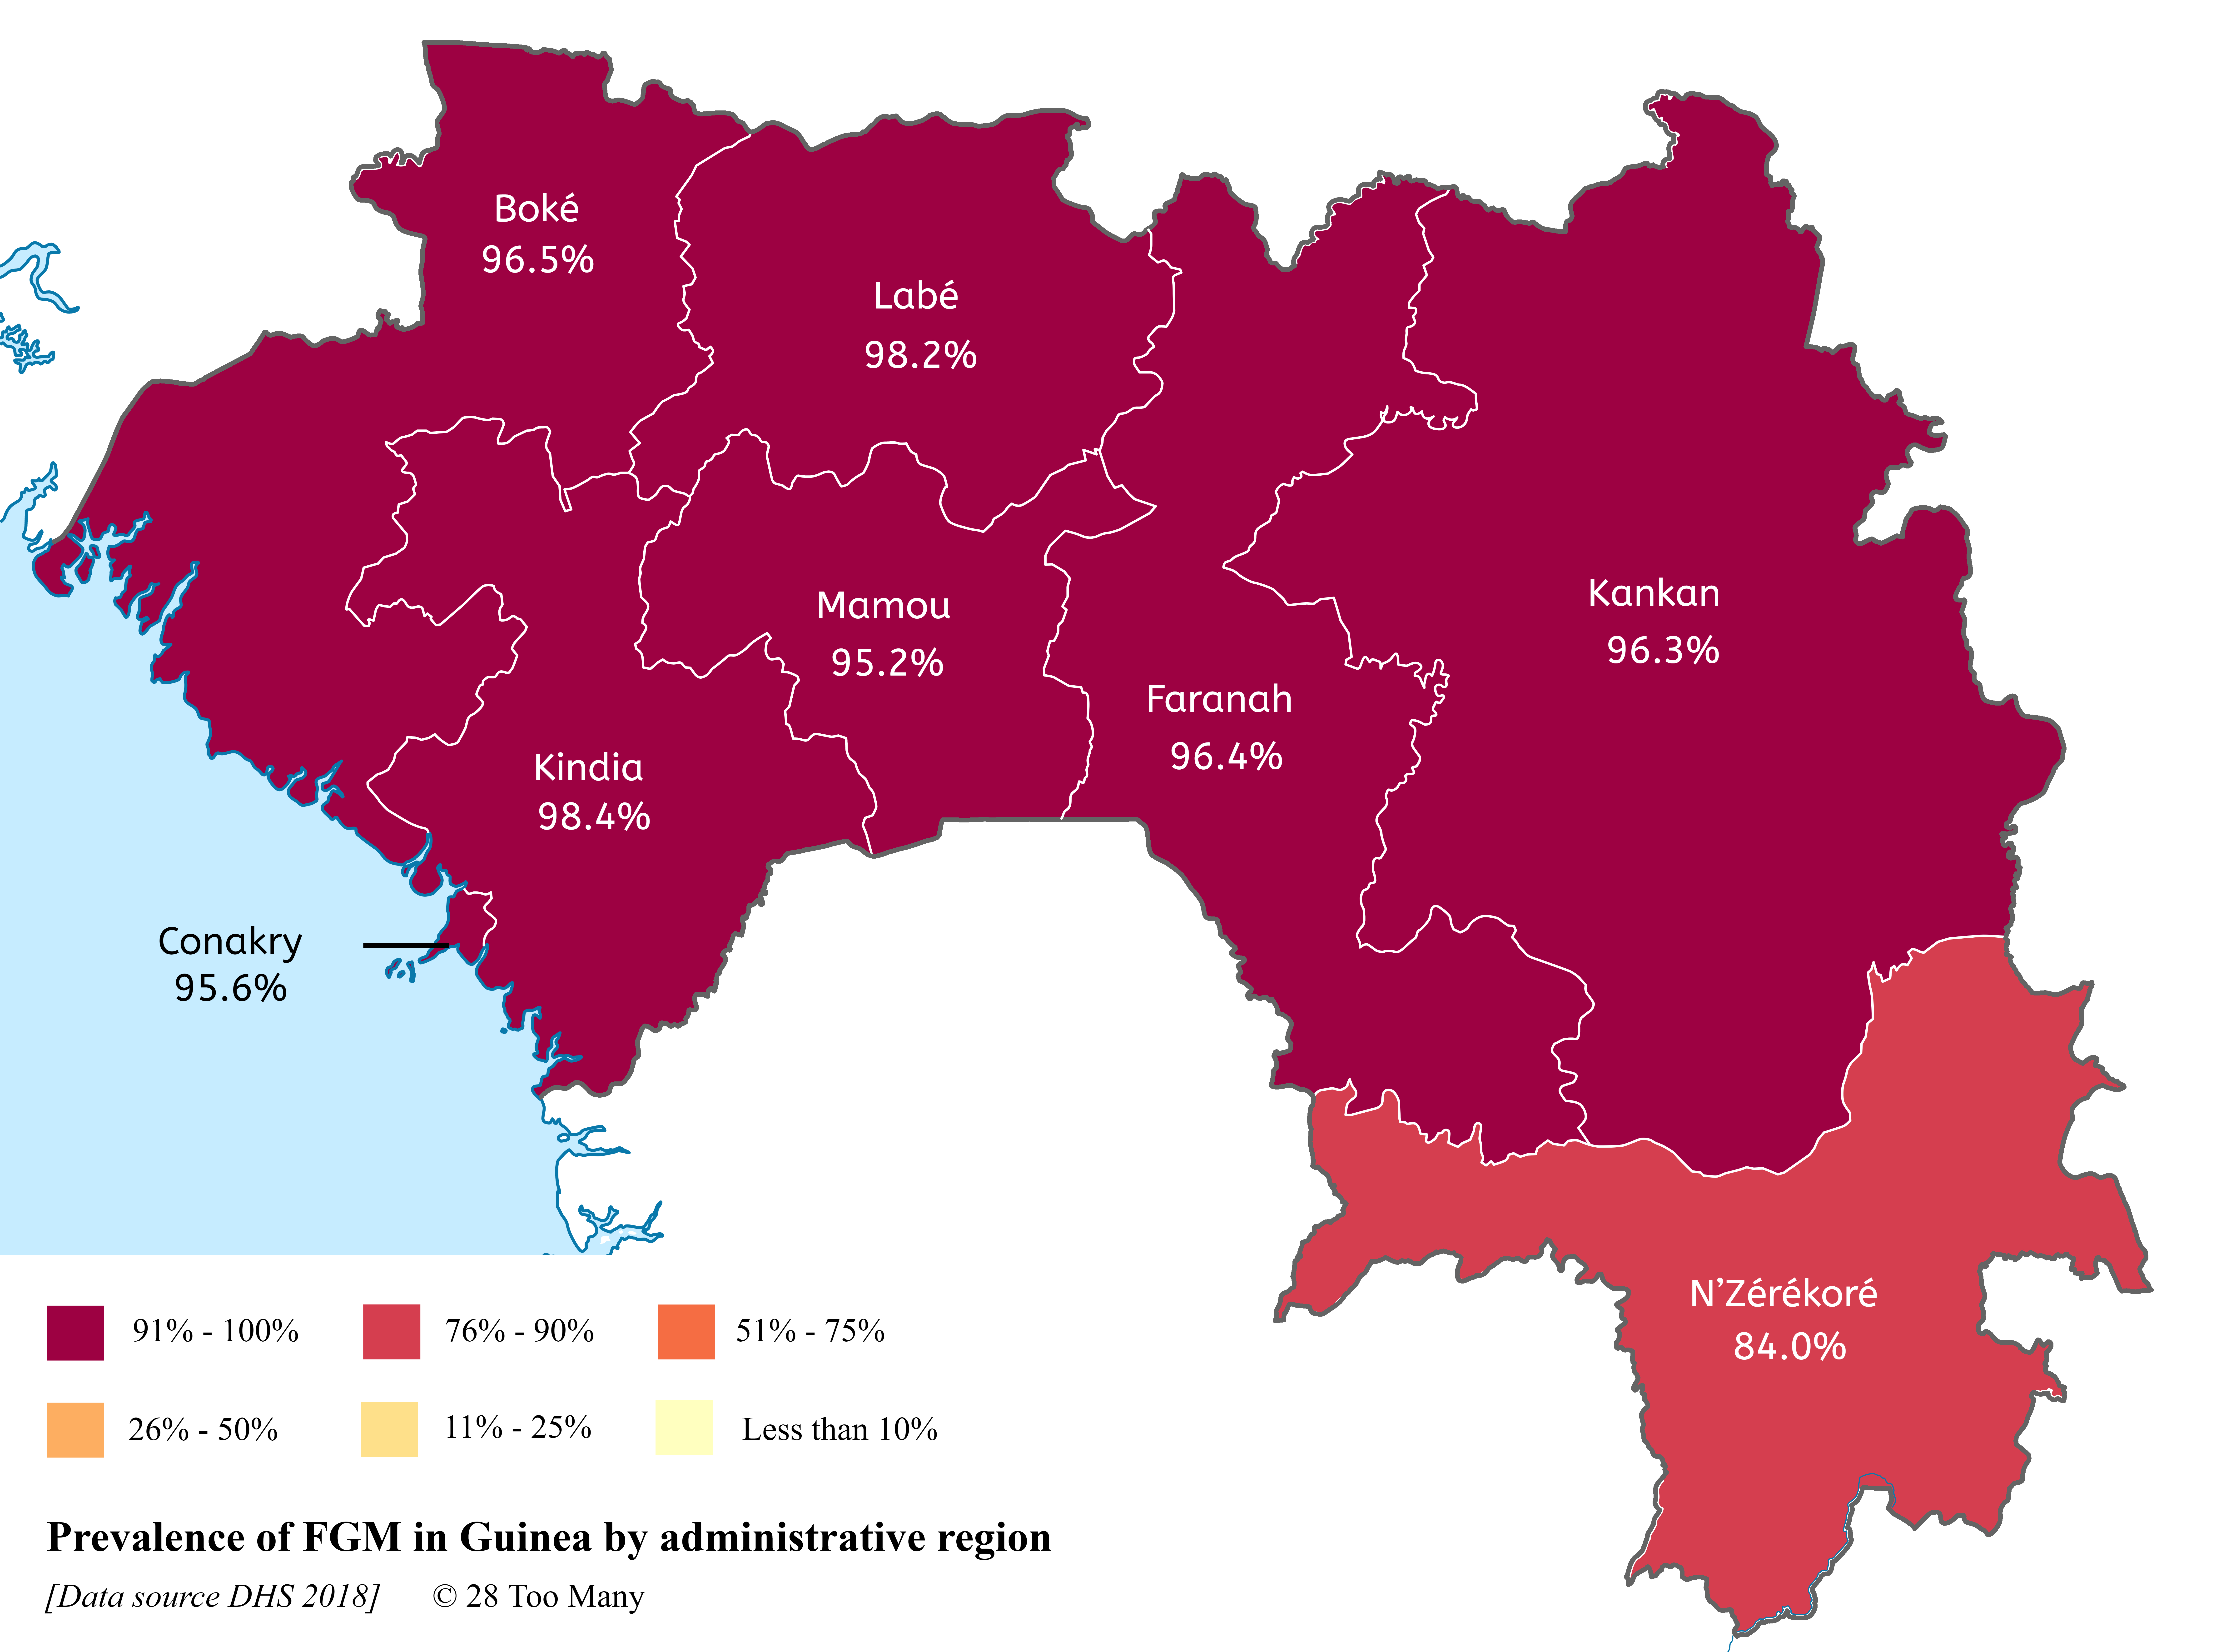 Distribution of FGM/C across Guinea